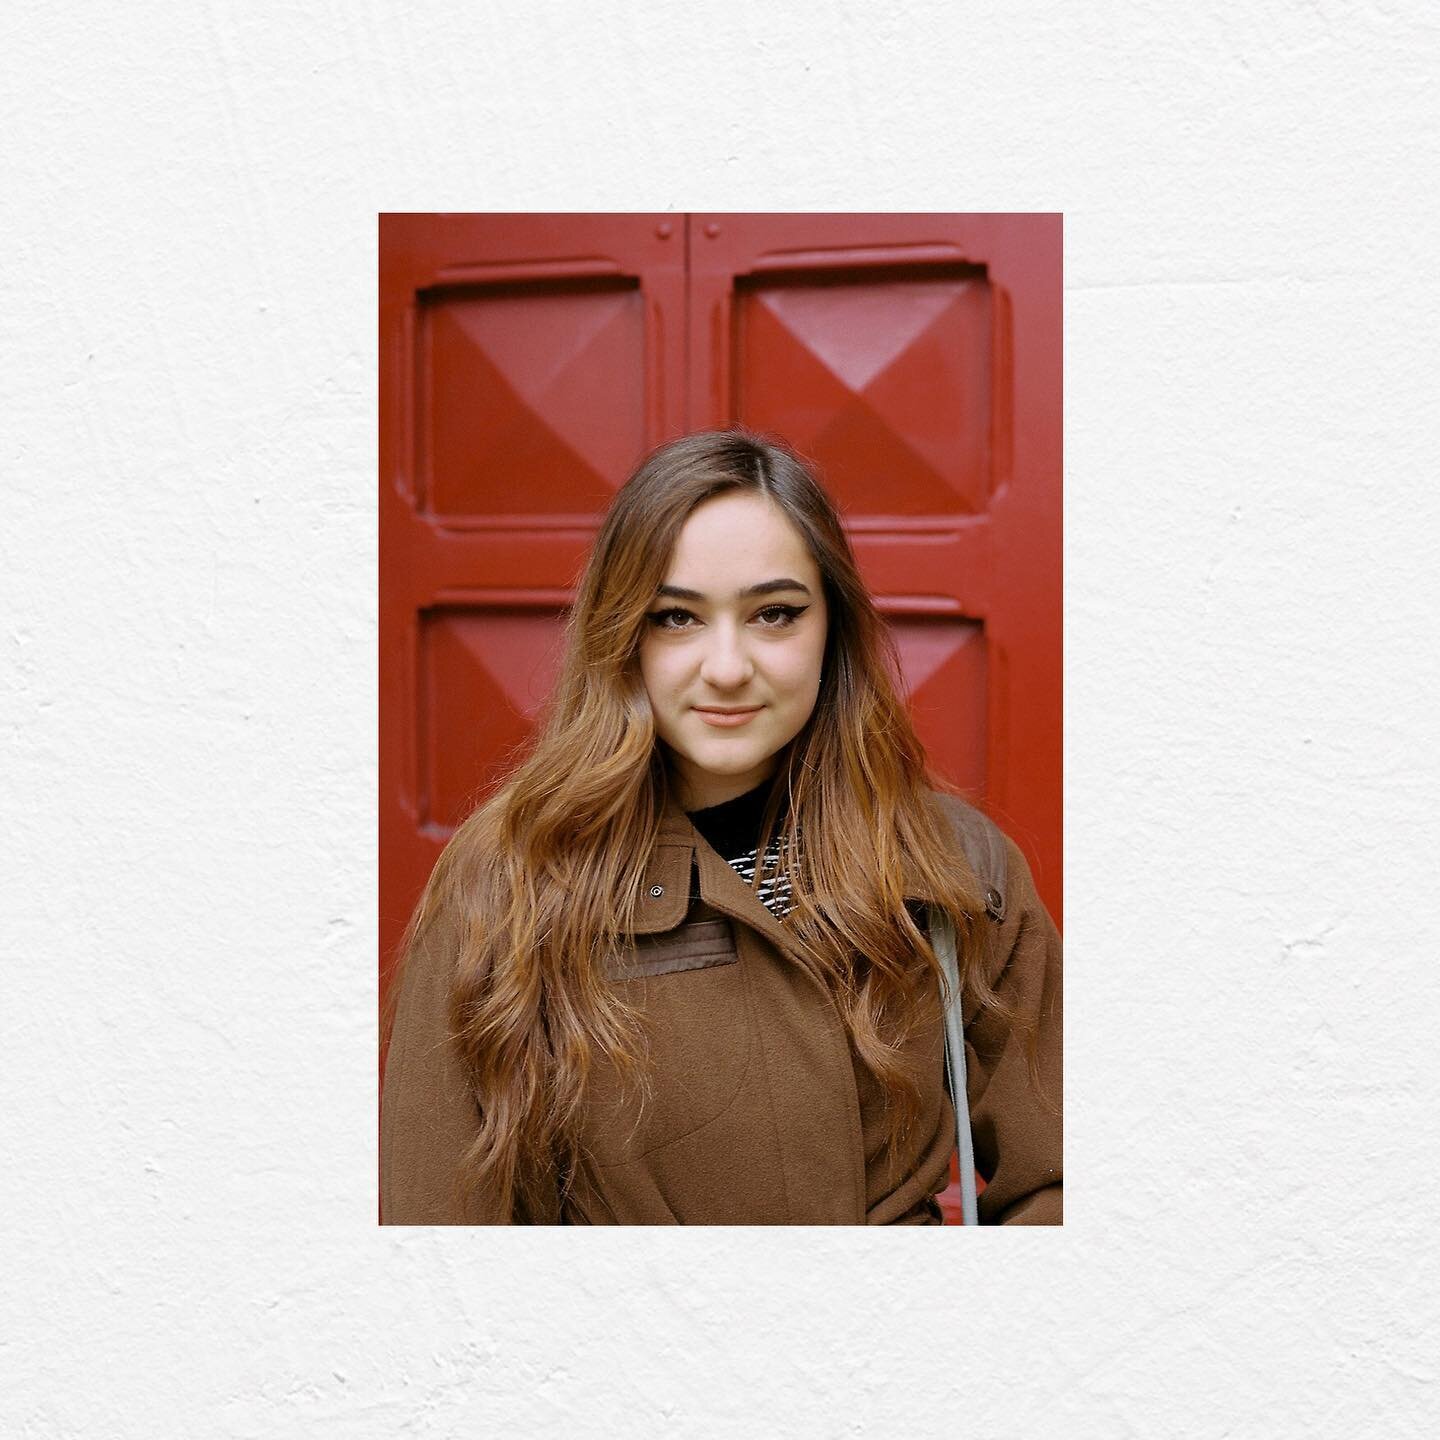 the stunning miss salganik!

#35mm #portra400 #film #canona1 #photography #design #dublin #ireland #gallery #red #door #photo #portra #lovedublin #dawsonstreet #art #irishart #camera #graphicdesign #filmphotography #filmphotographer #filmisnotdead